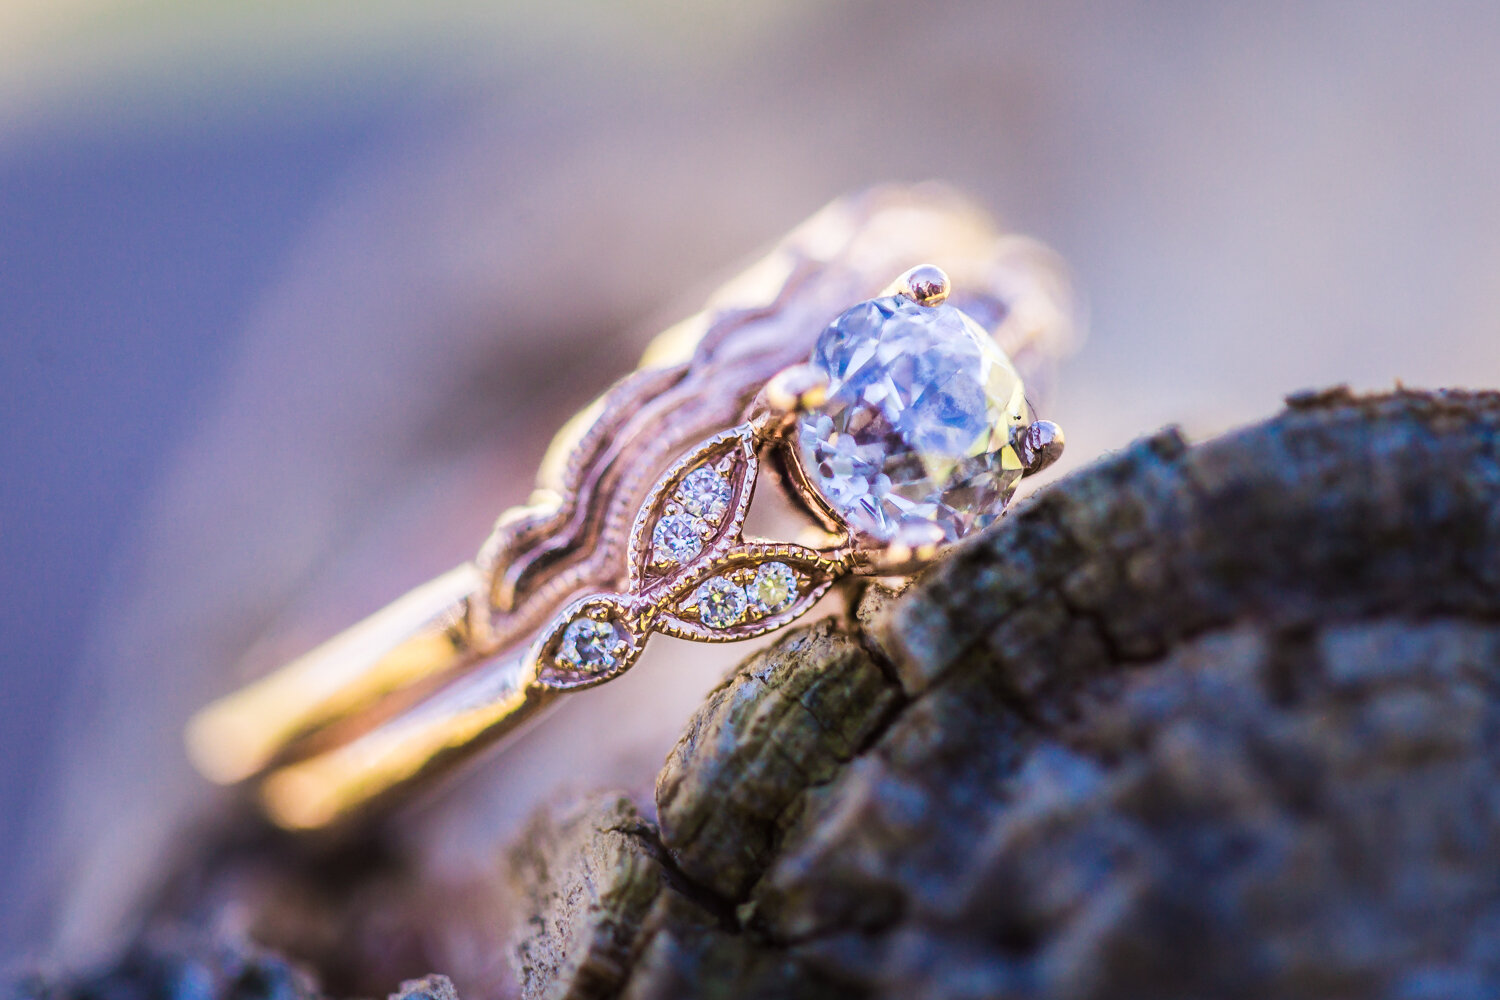  Wedding ring details by JMGant Photography 